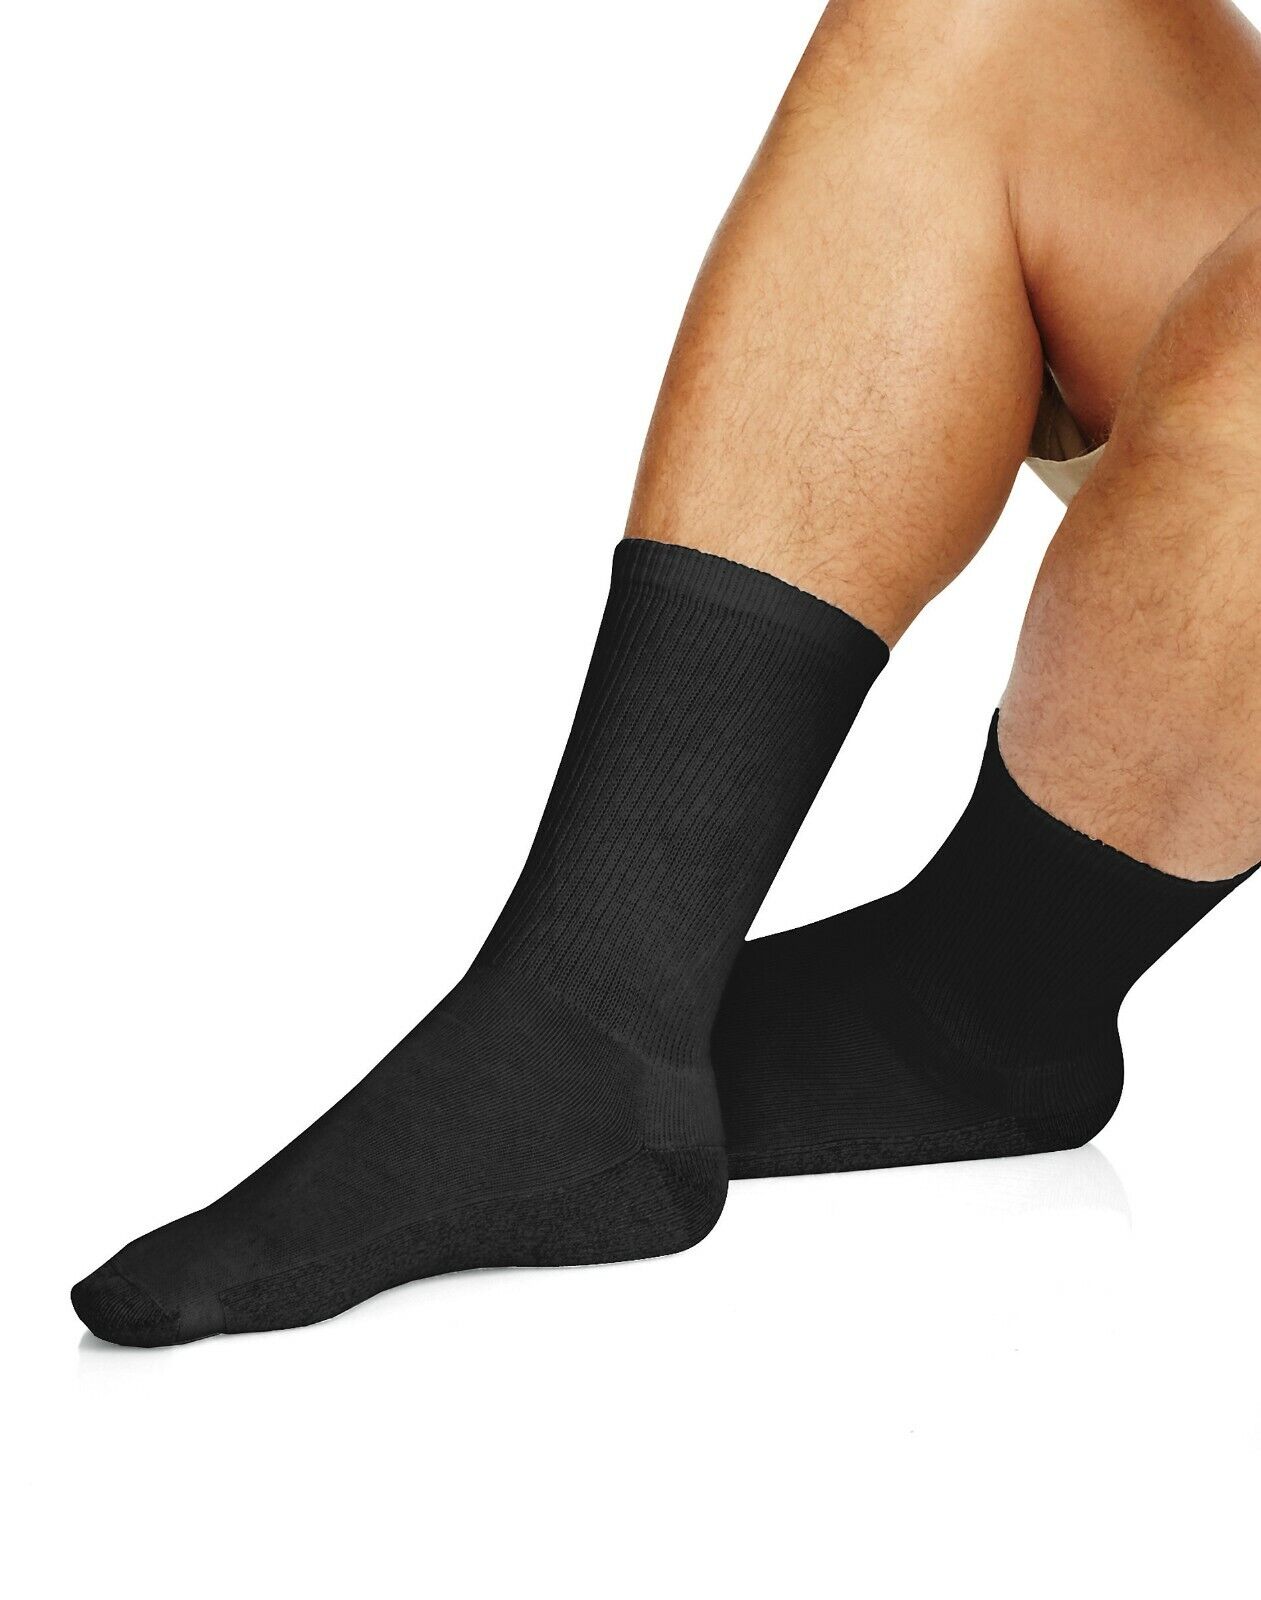 Hanes Premium Men's Crew Socks White Black Gray Socks Size:10-13/Shoe Size:6-12 Hanes - фотография #5